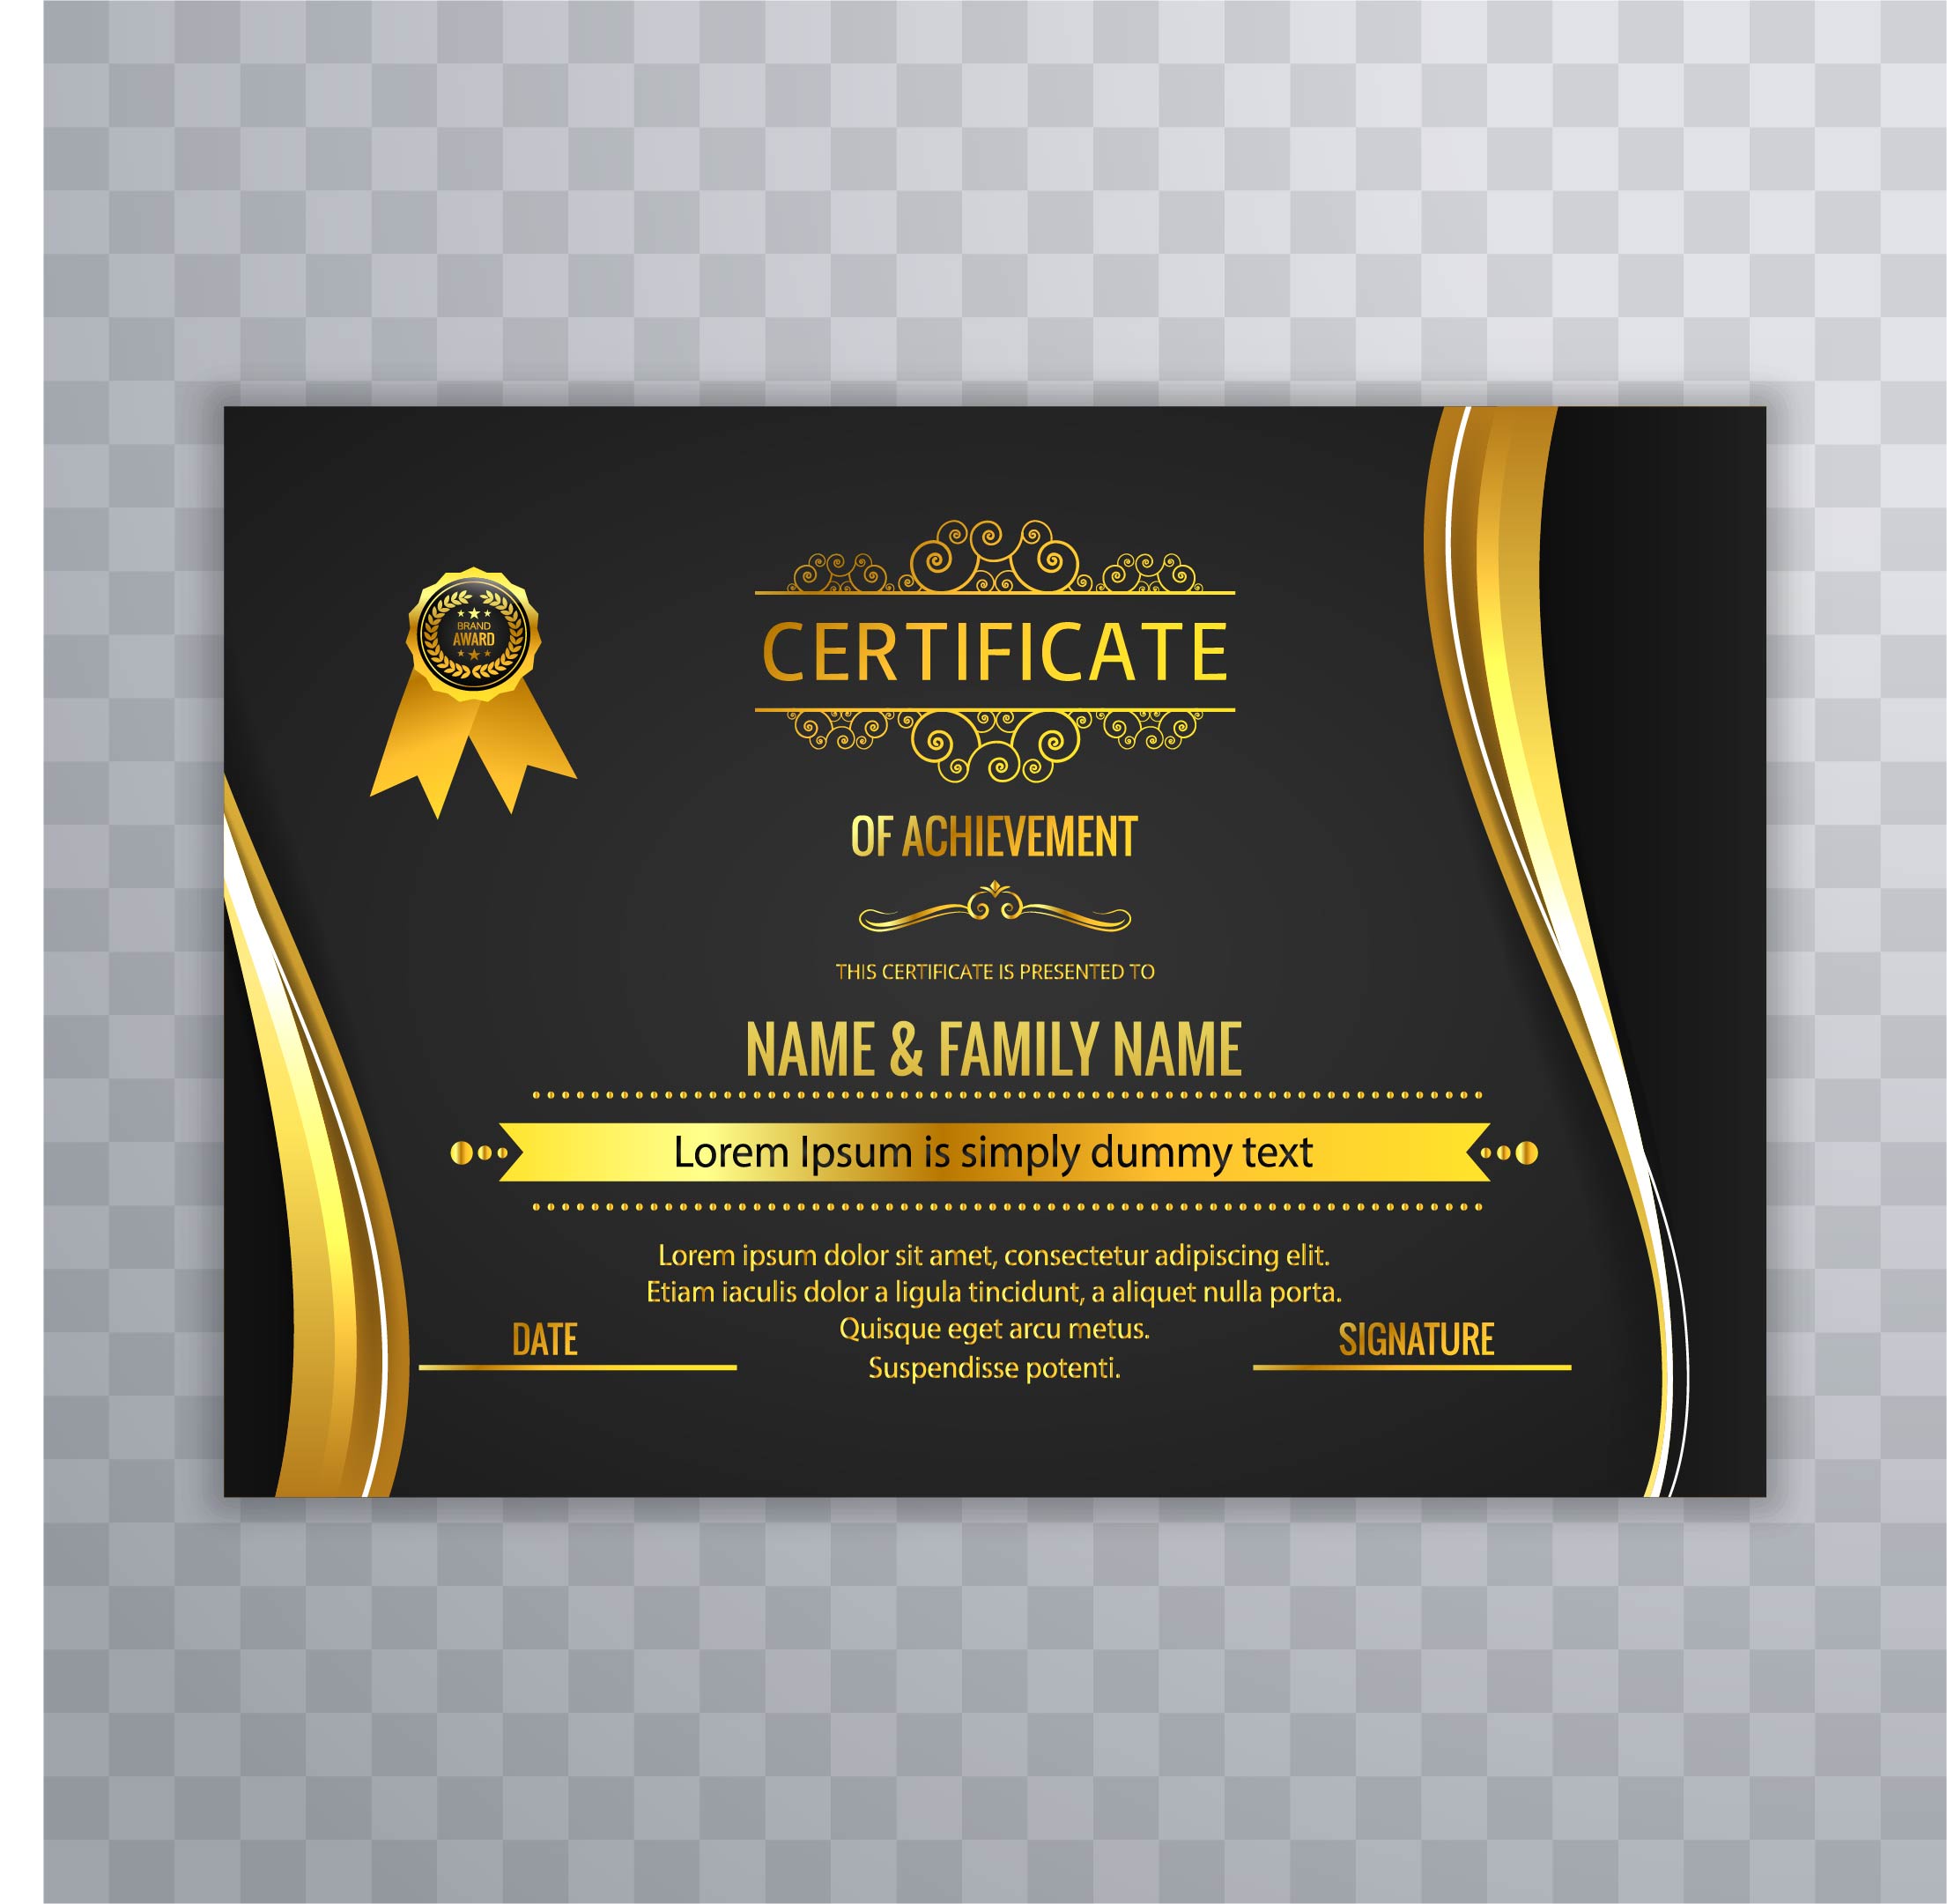 certificate-design-template-free-download-powenimage